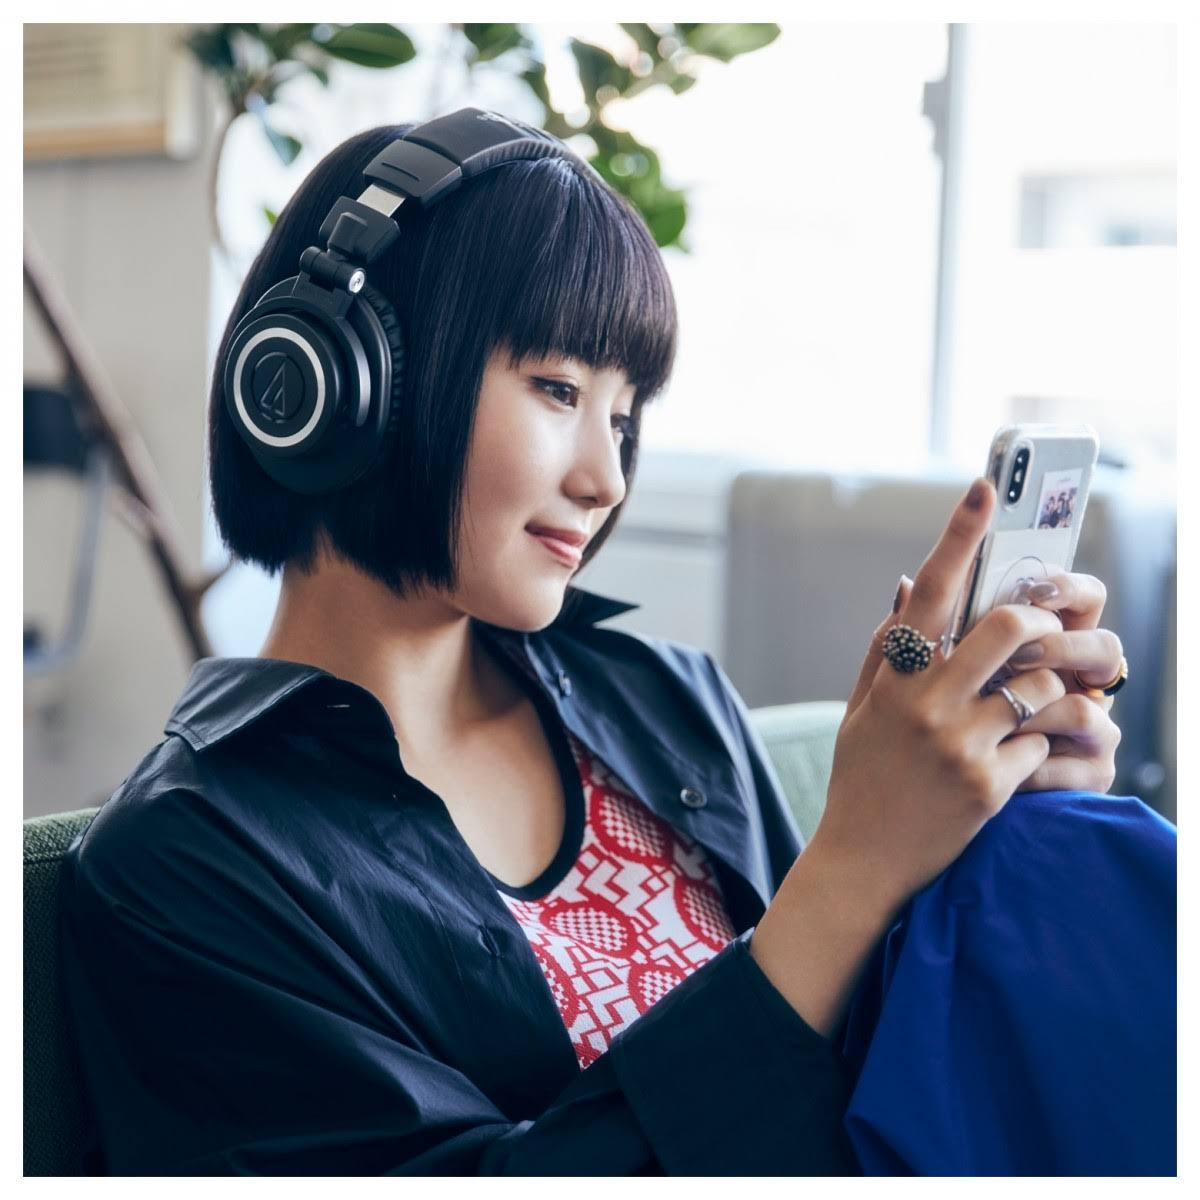 Black On-ear Wireless Headphones AUDIO-TECHNICA black, Bluetooth Headphones Bluetooth